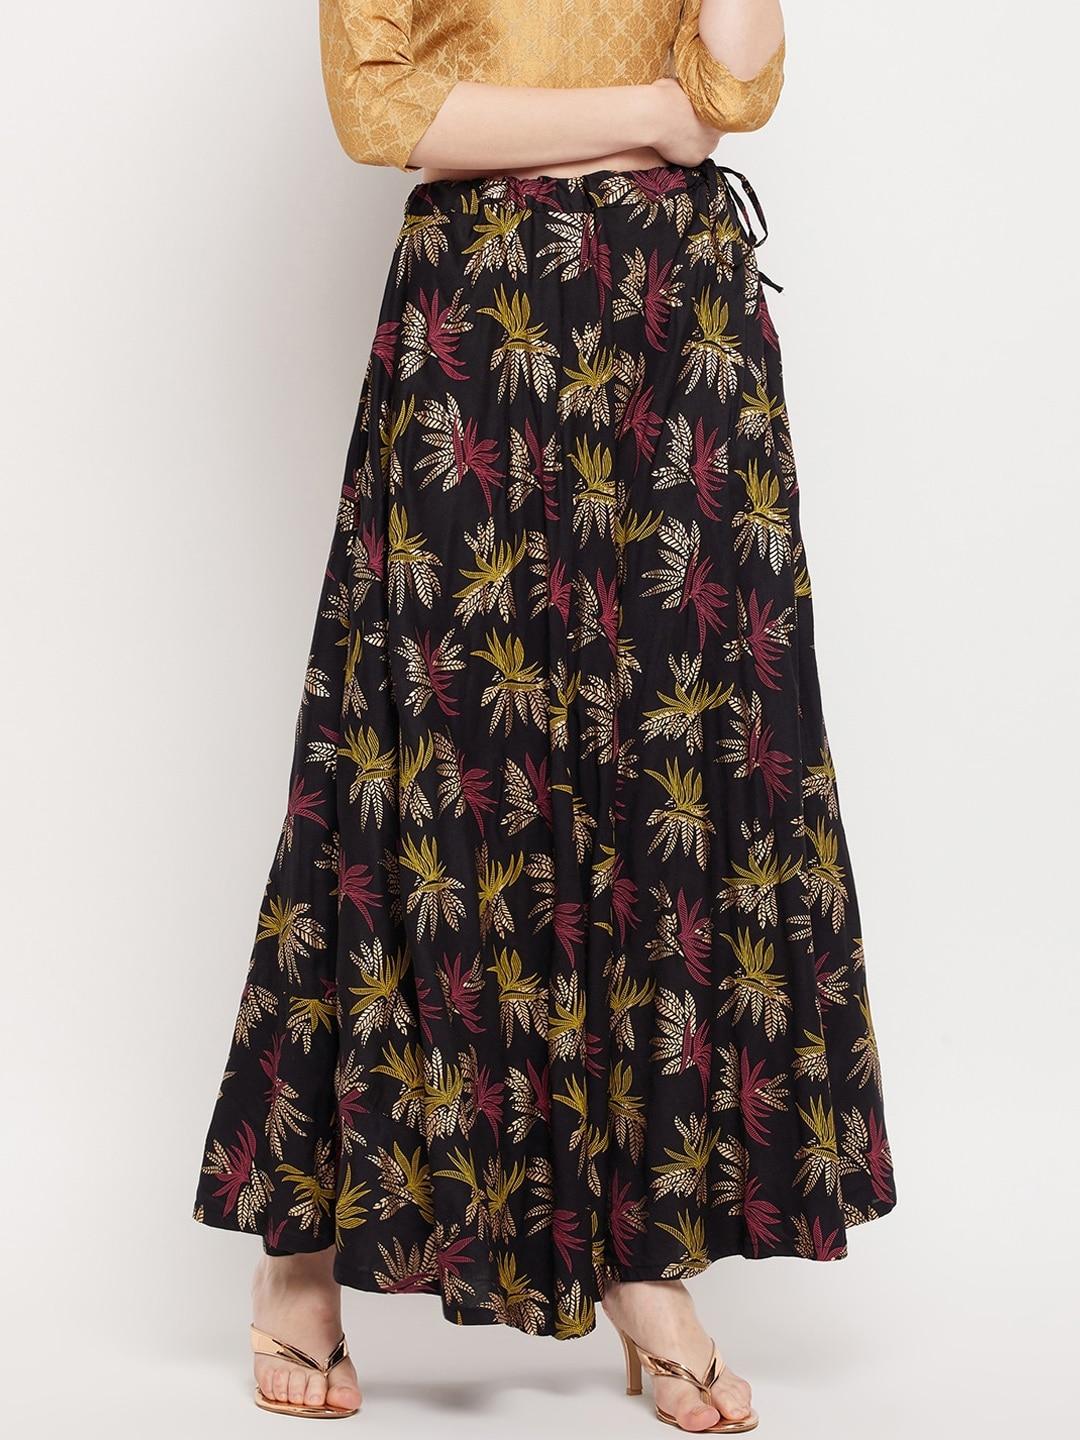 clora-creation-black-floral-printed-skirts